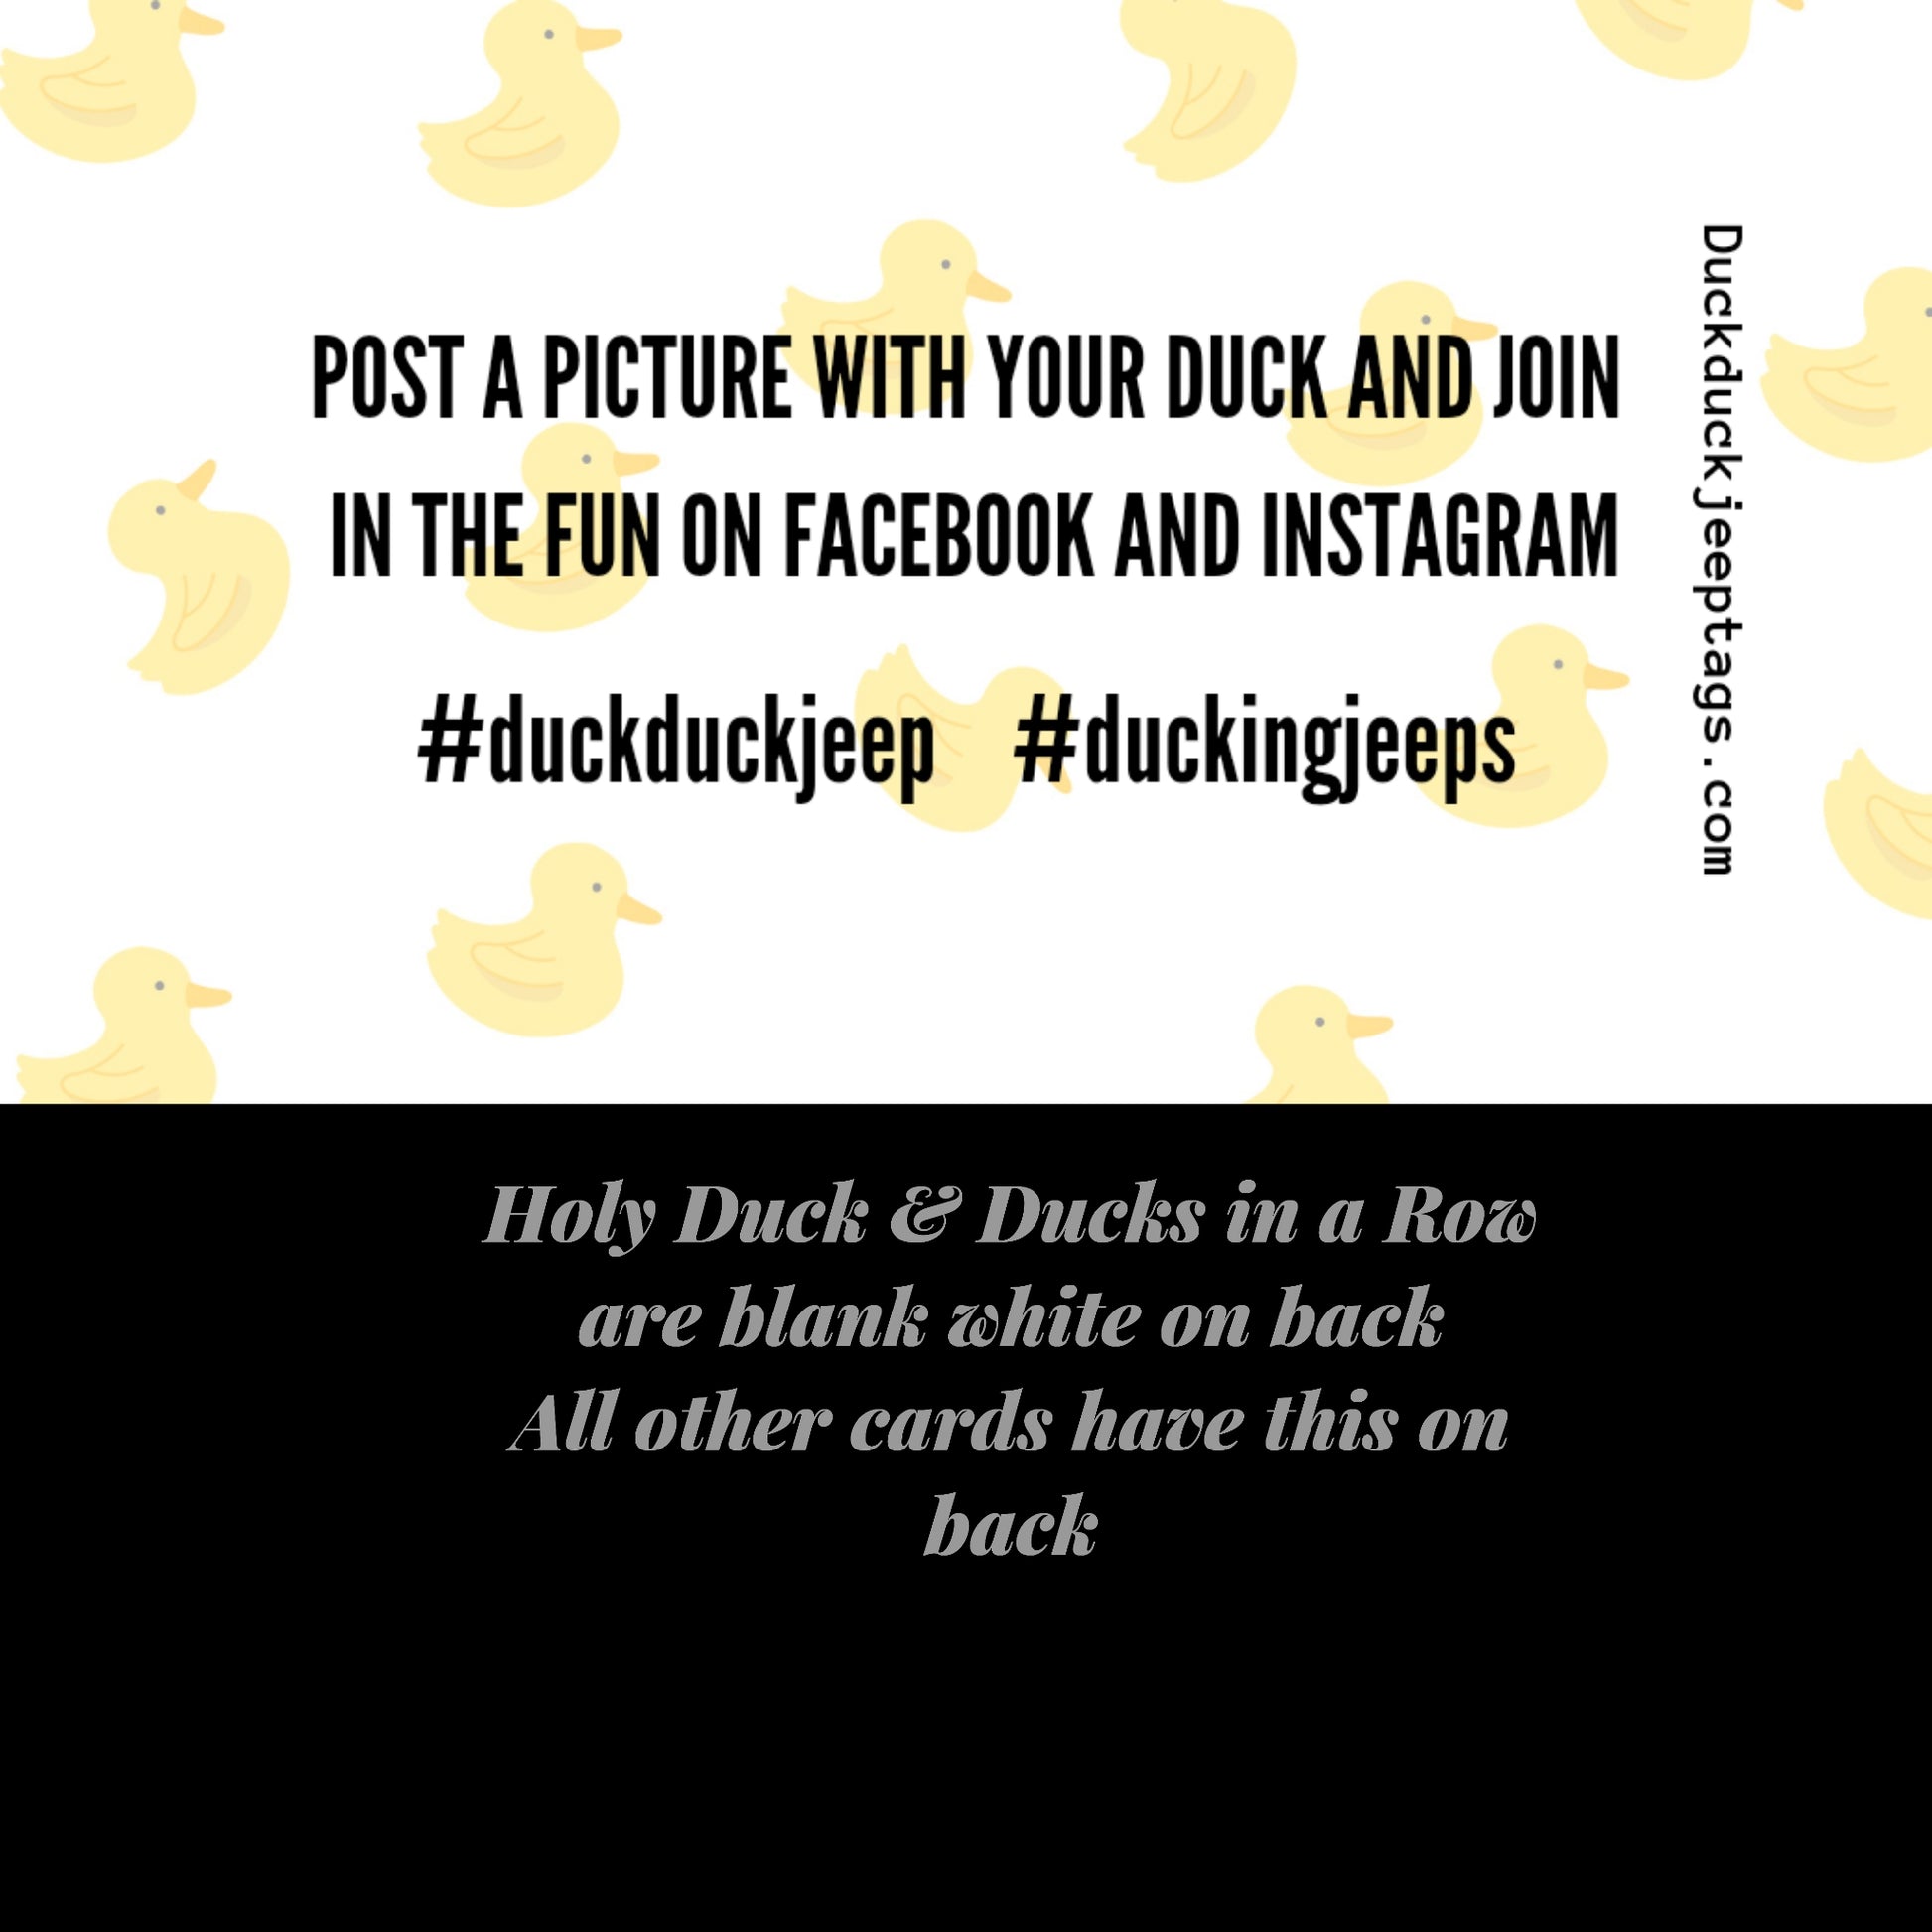 Rubber Duck Random Assortment BONUS Free Ducking Bag